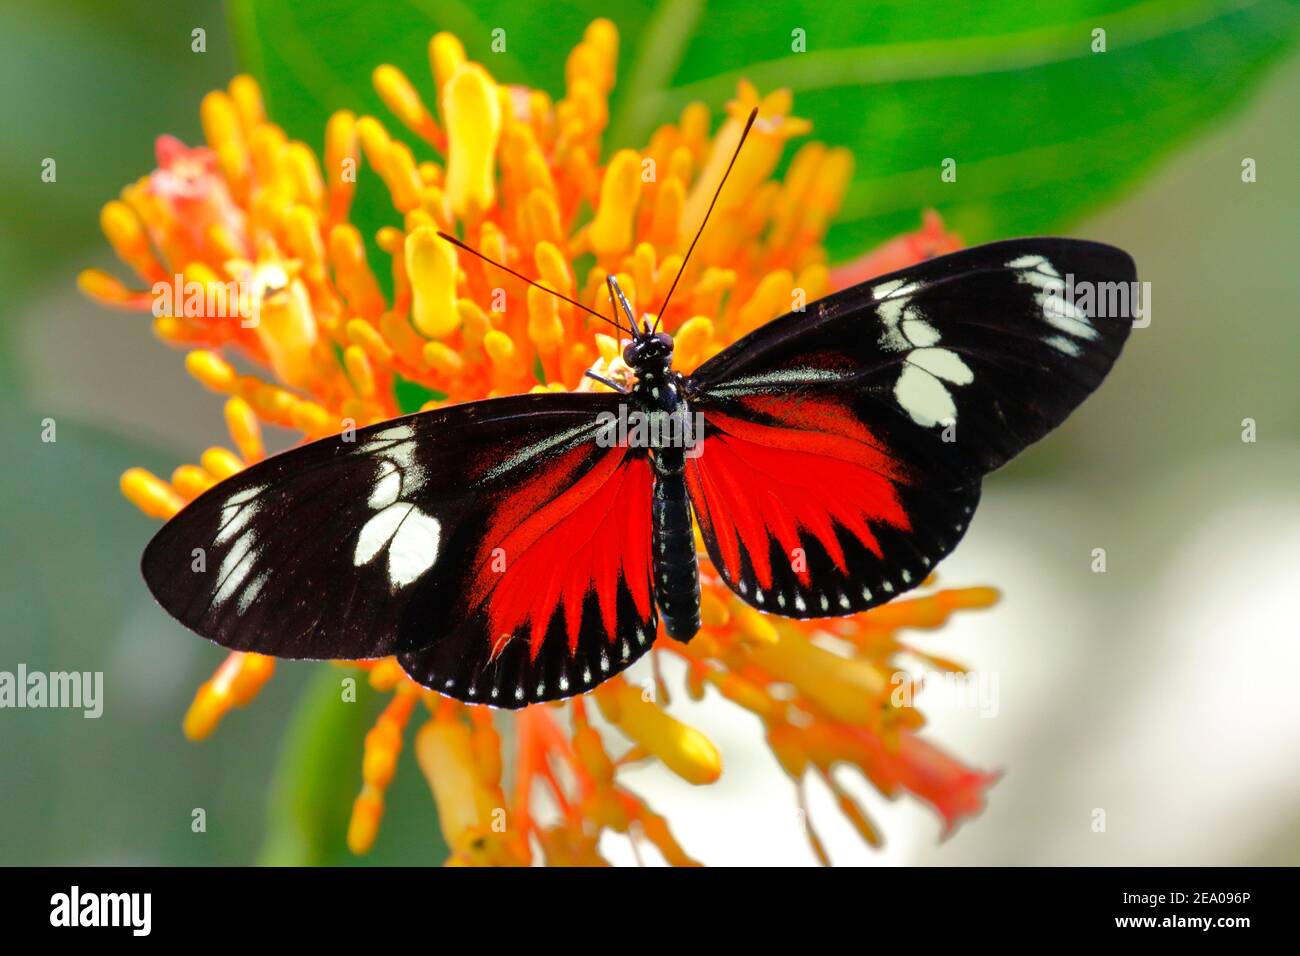 A Doris longwing butterfly, Laparus doris, taking nectar from a fire bush flower. Stock Photo